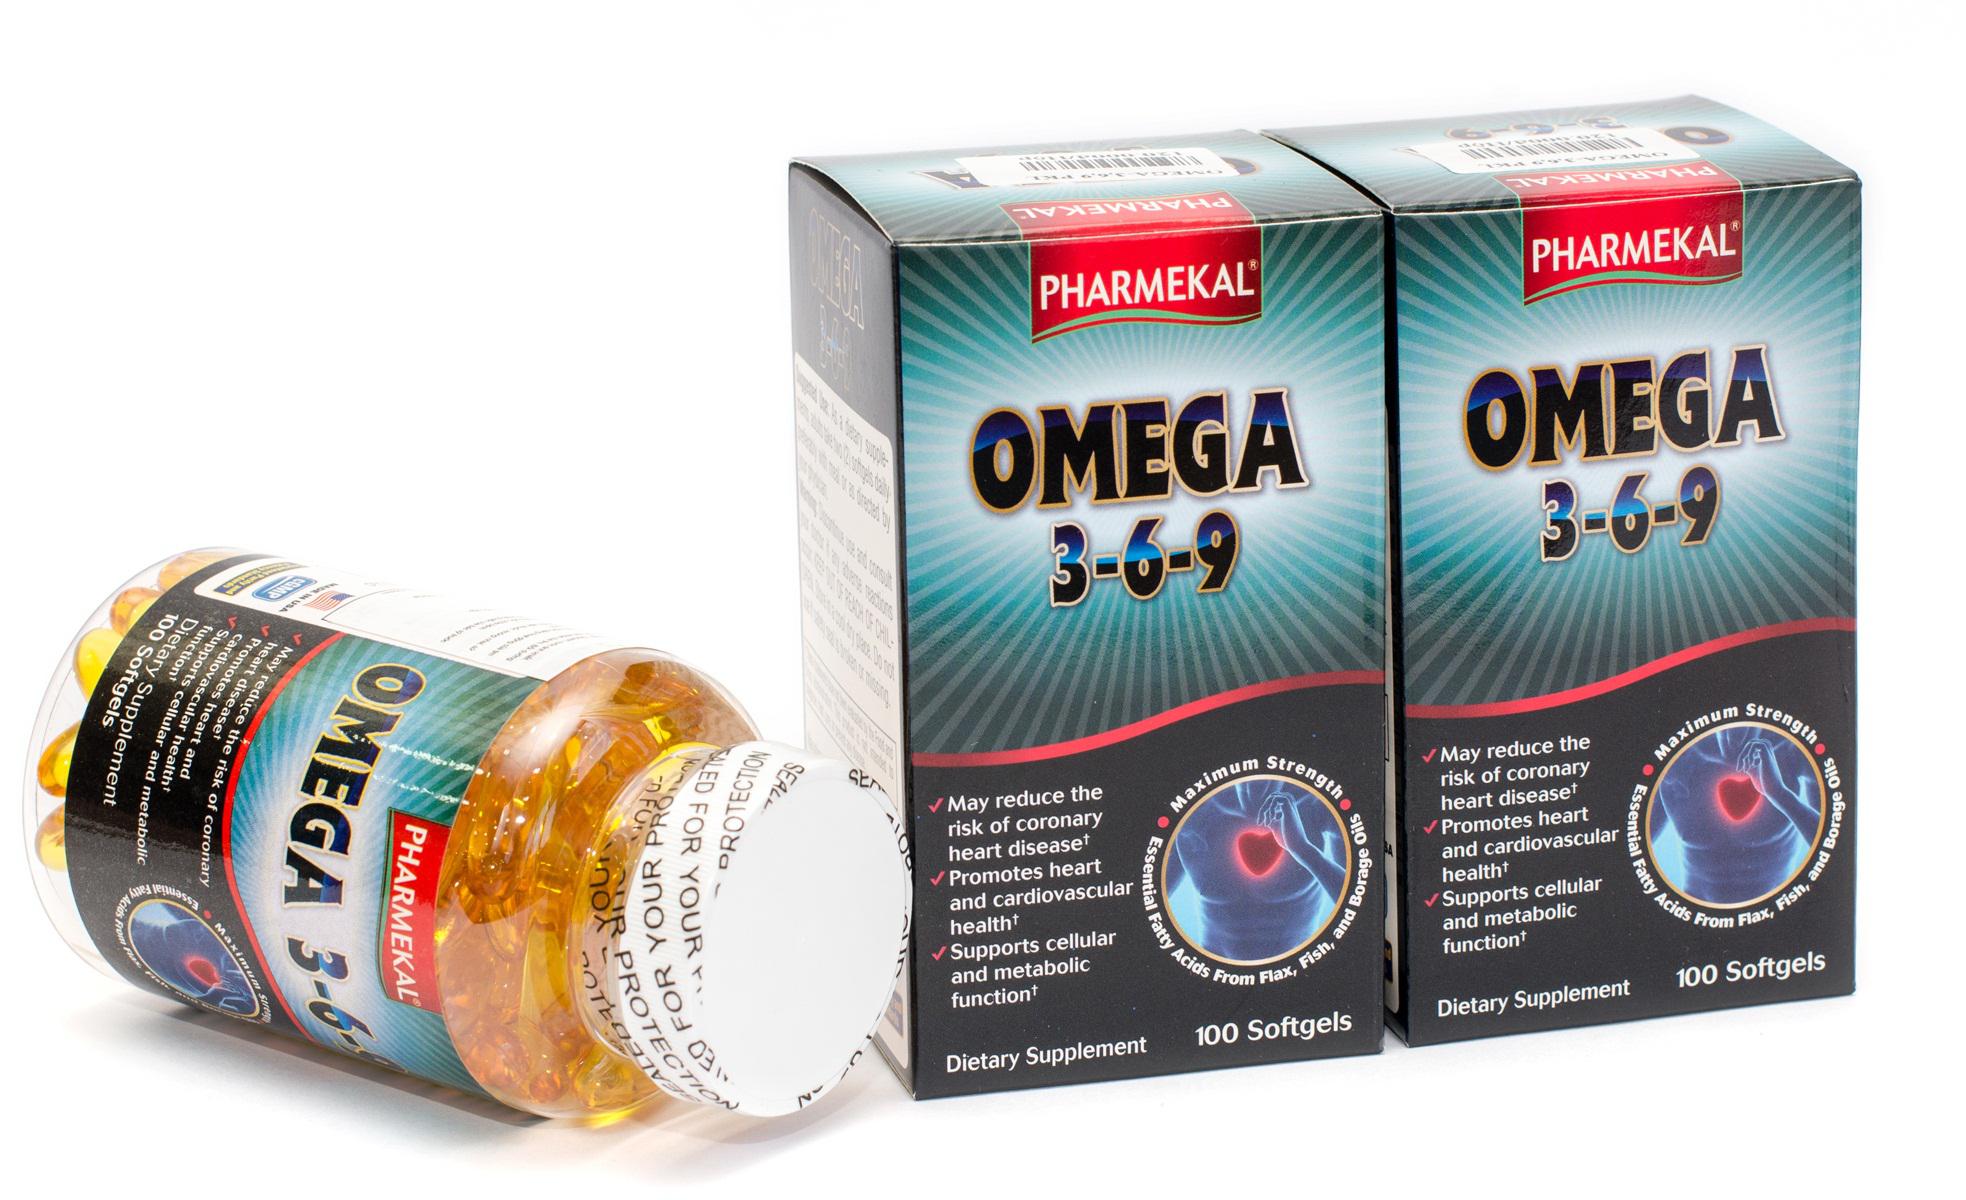 Pharmekal Omega 3-6-9 tốt cho mắt